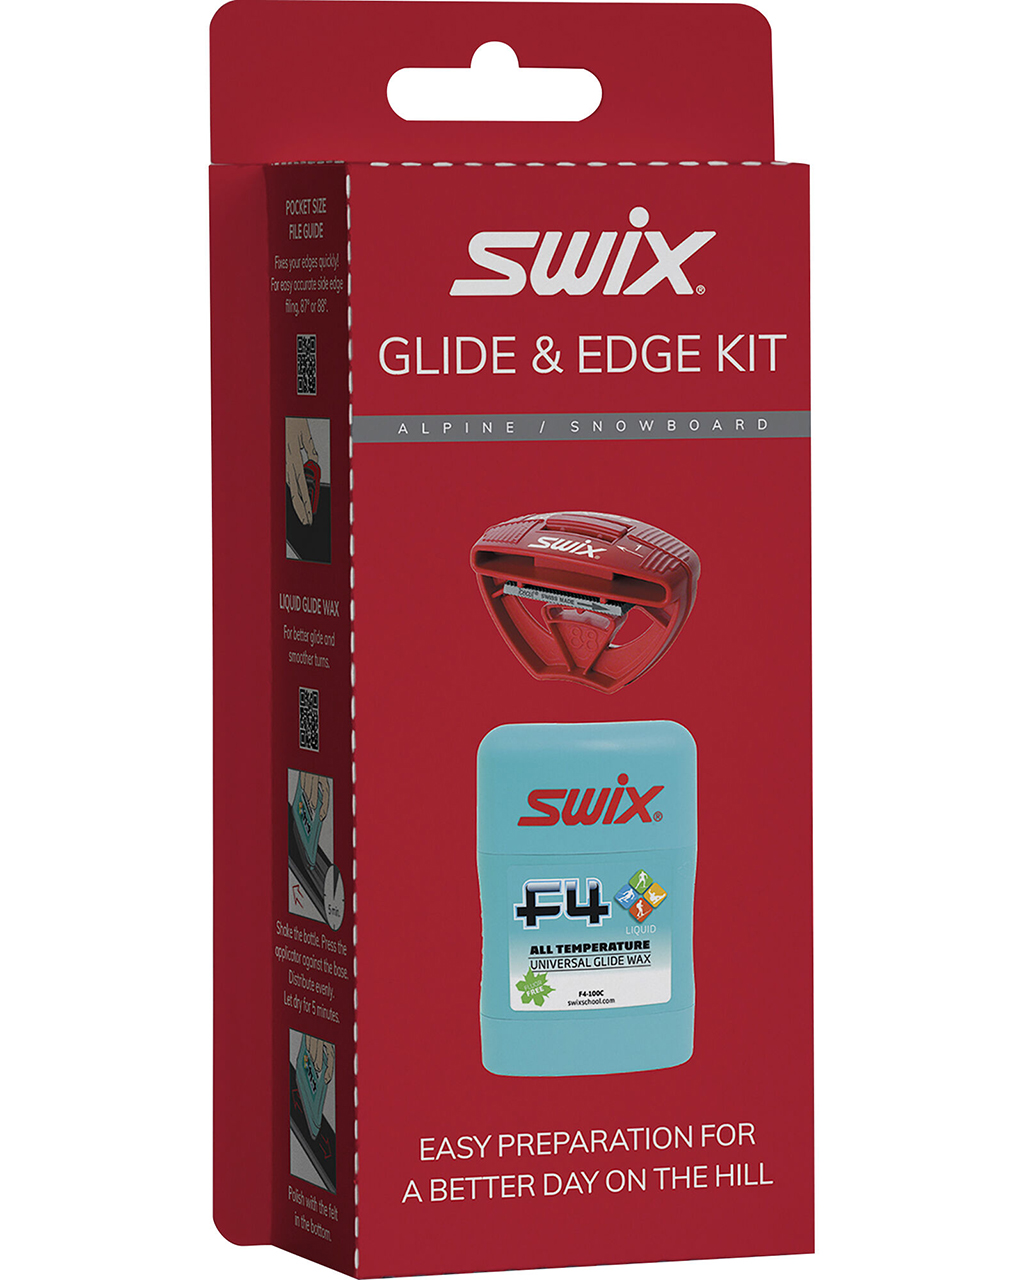 Swix P21 Glide & Edge Kit Red